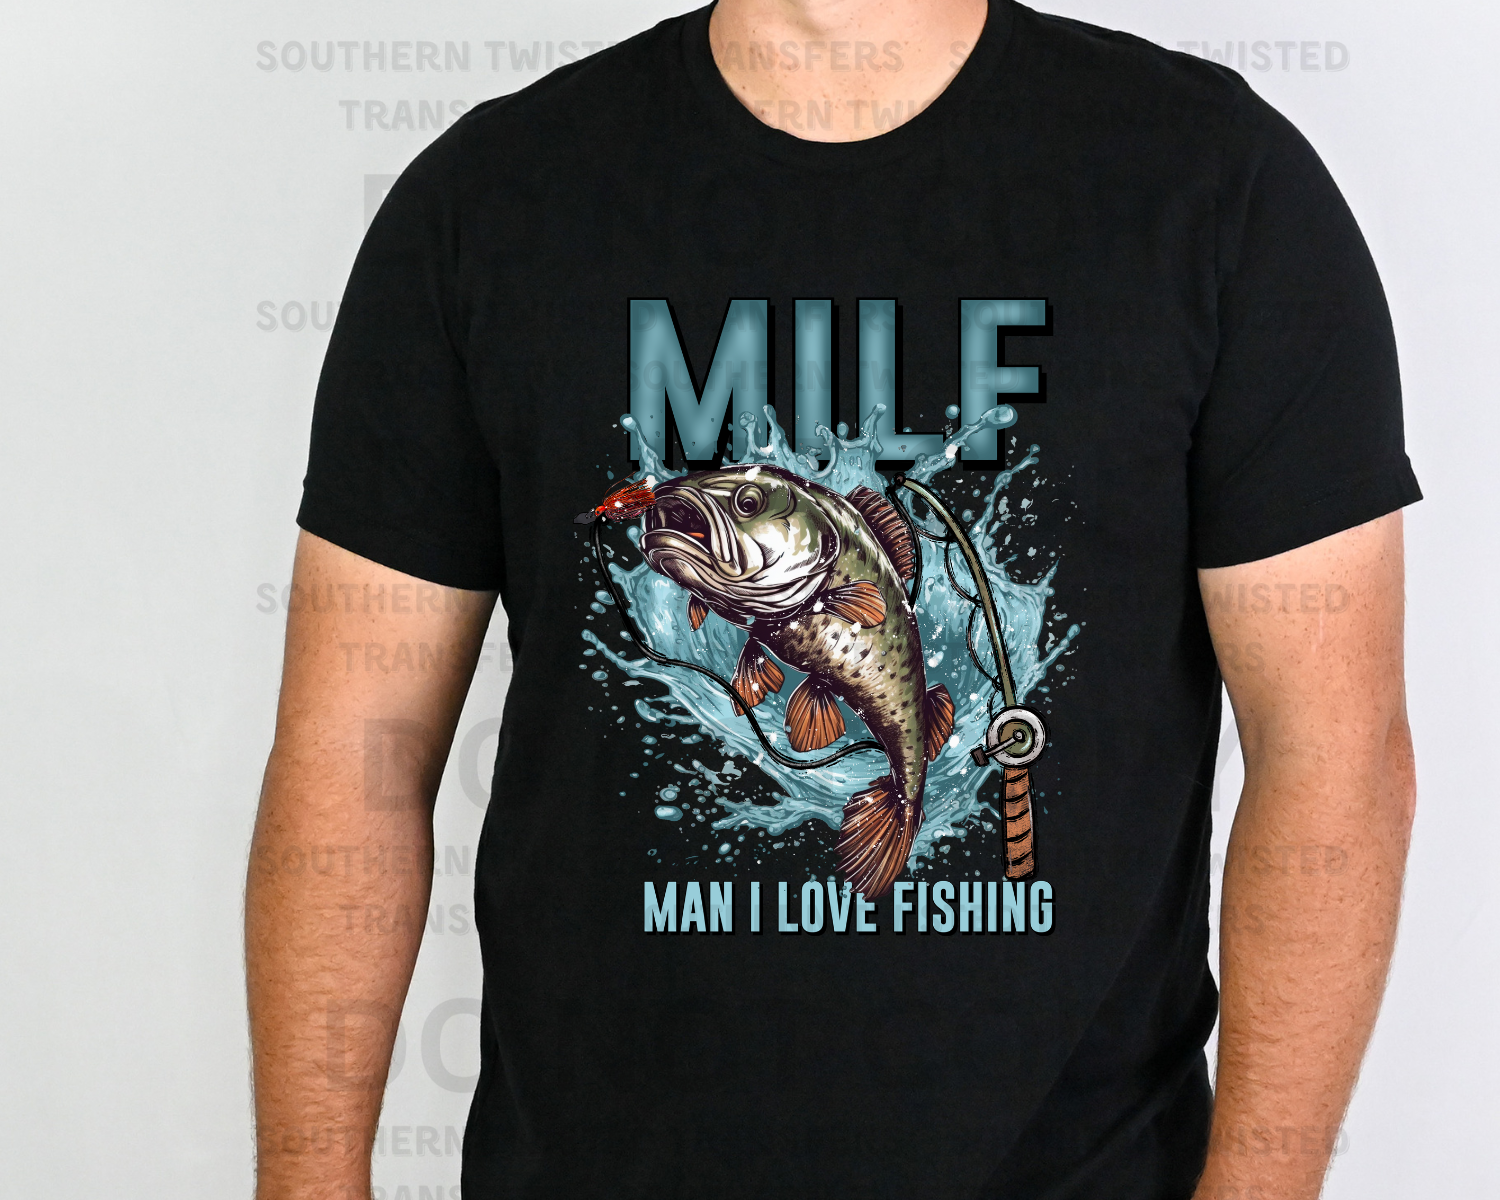 Man I Love Fishing - MILF – Southern Twisted Tees